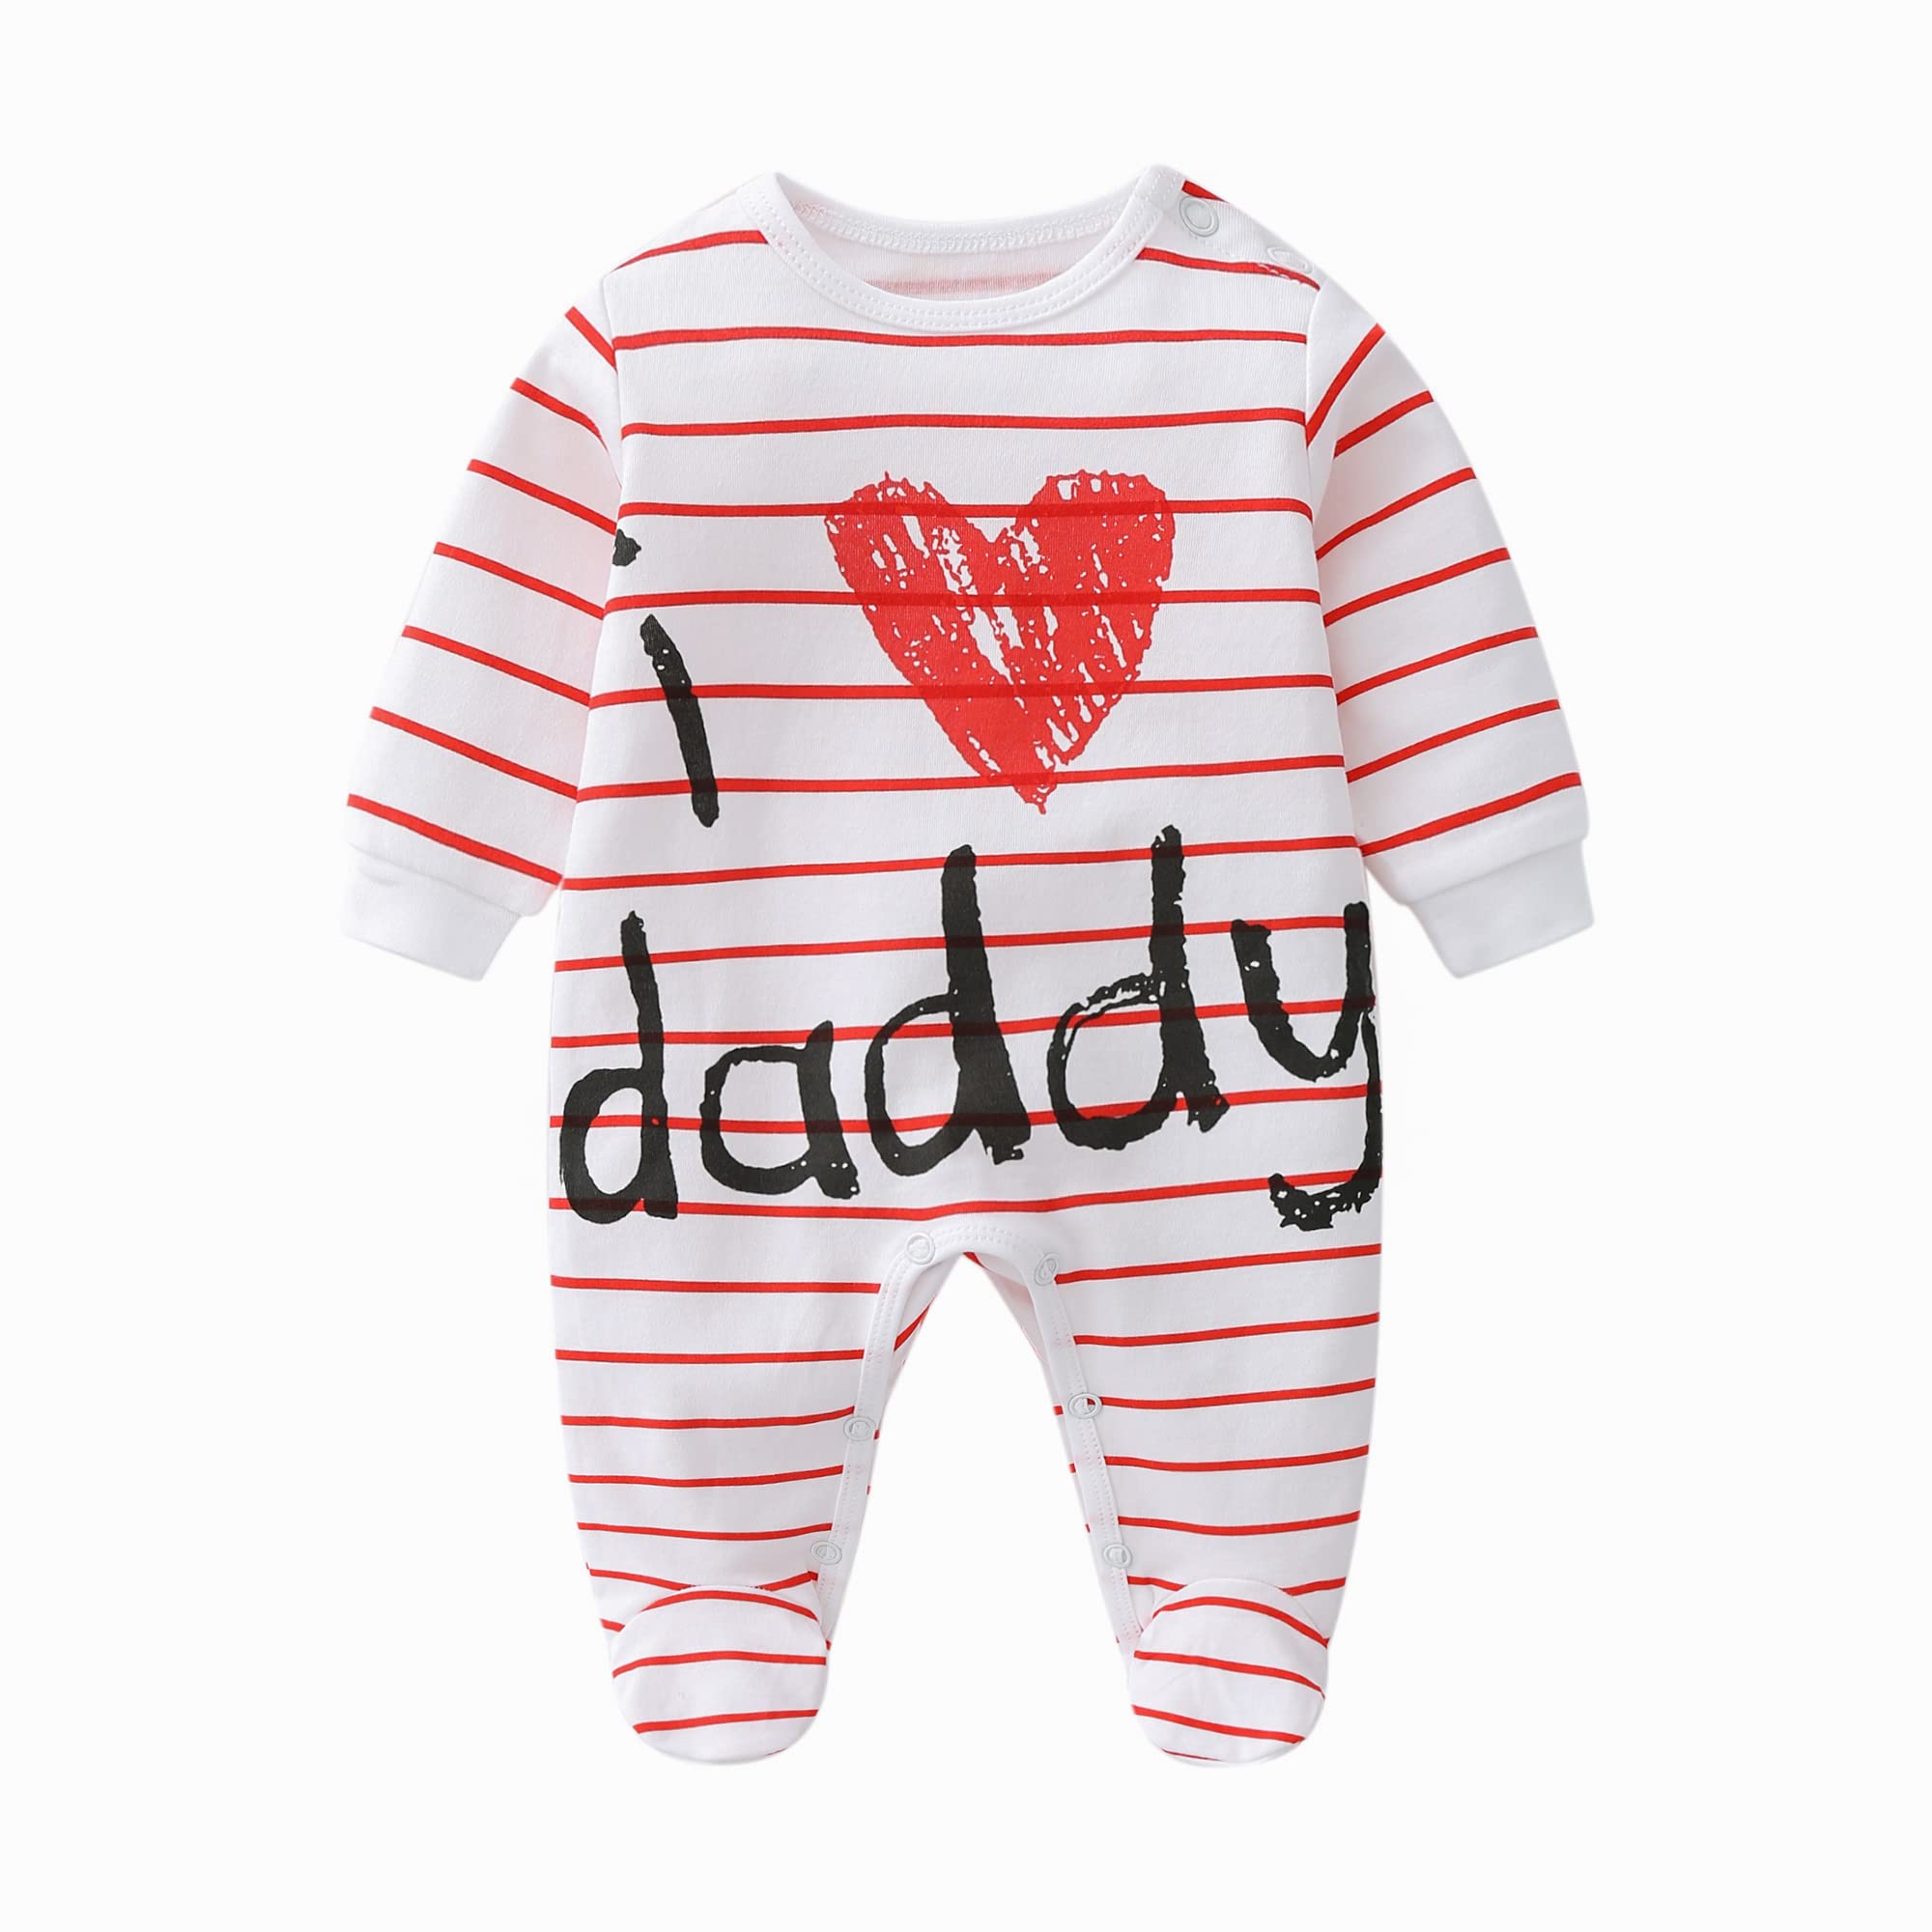 AOMOMO Unisex-Baby Clothes Newborn Twins I Love Mummy I Love Daddy Bodysuit Twins 2 Pack